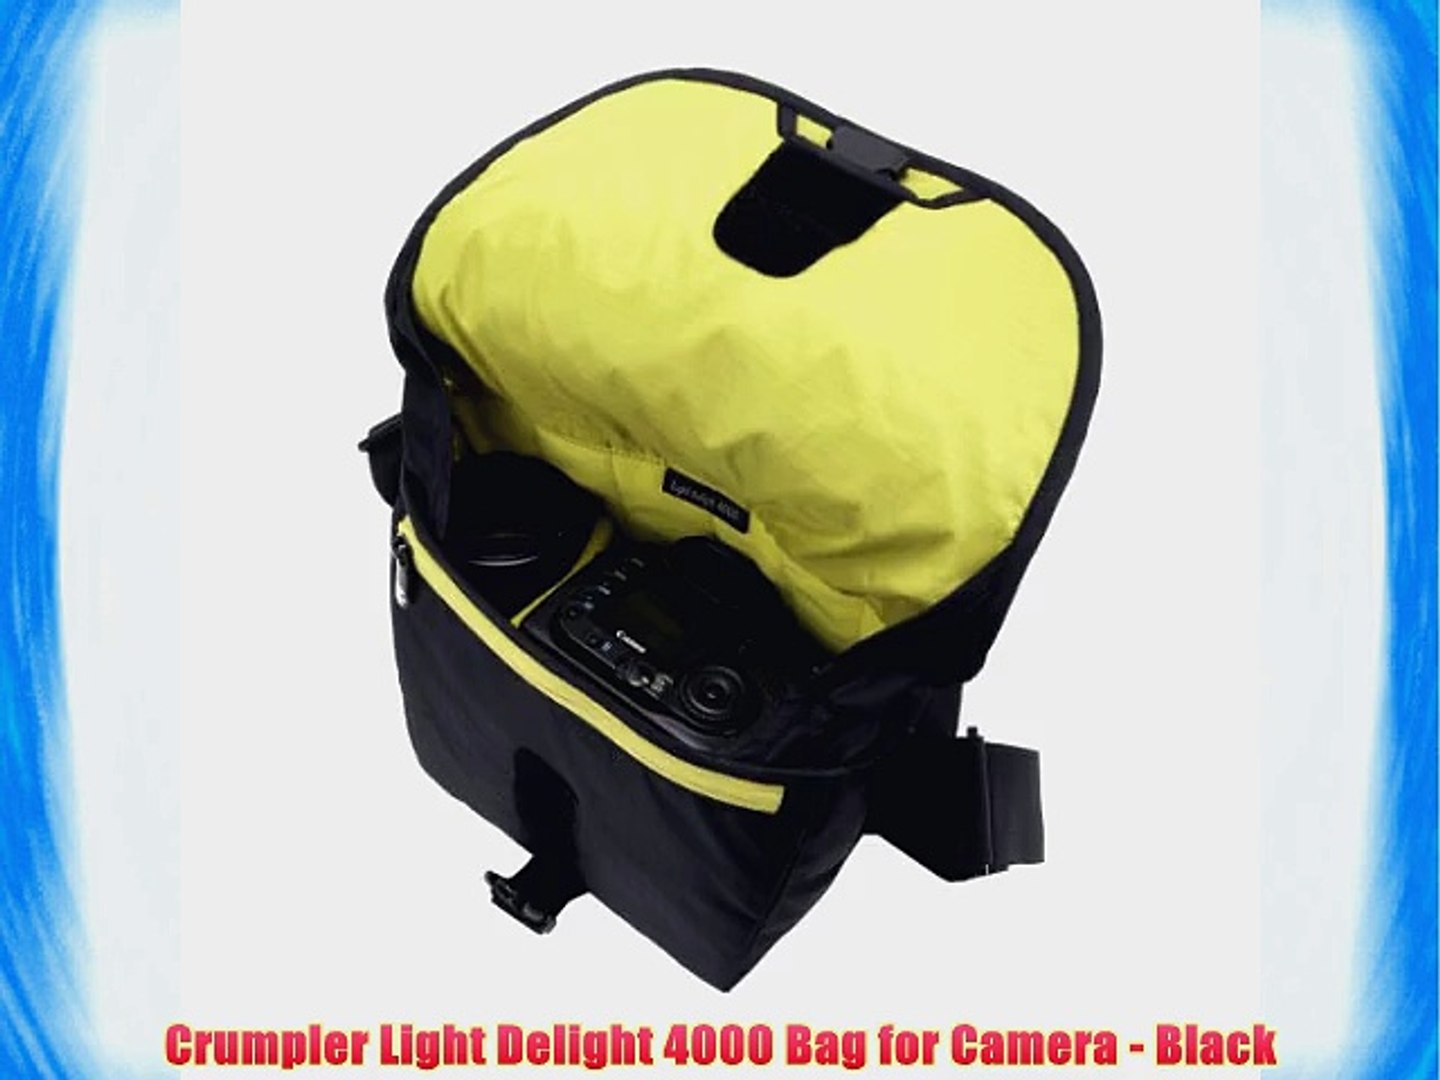 Crumpler Light Delight 4000 Bag for Camera - Black - video Dailymotion